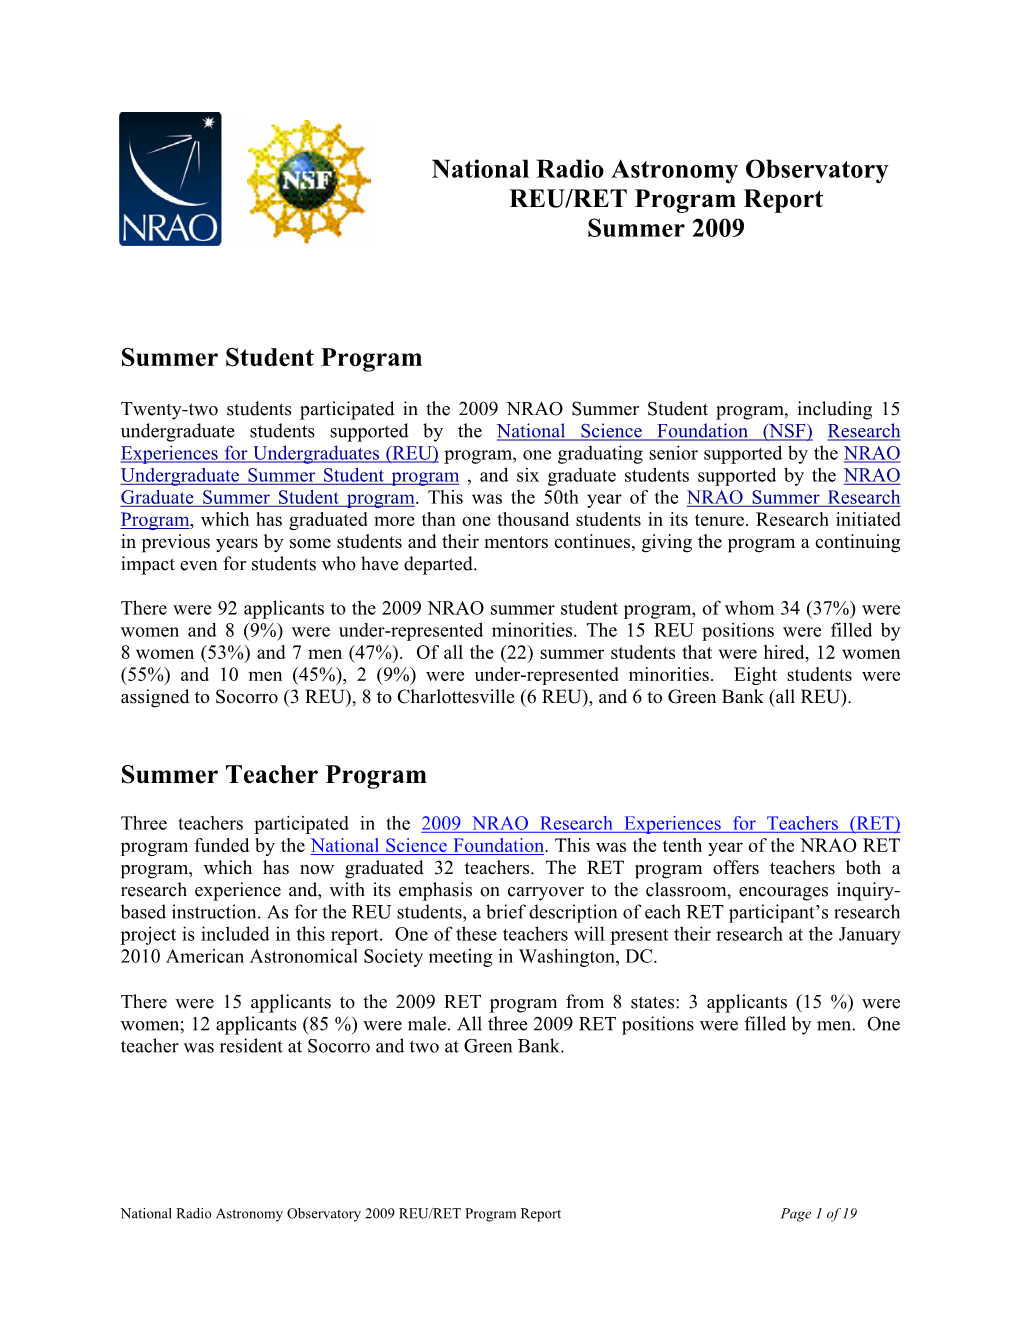 National Radio Astronomy Observatory REU/RET Program Report Summer 2009